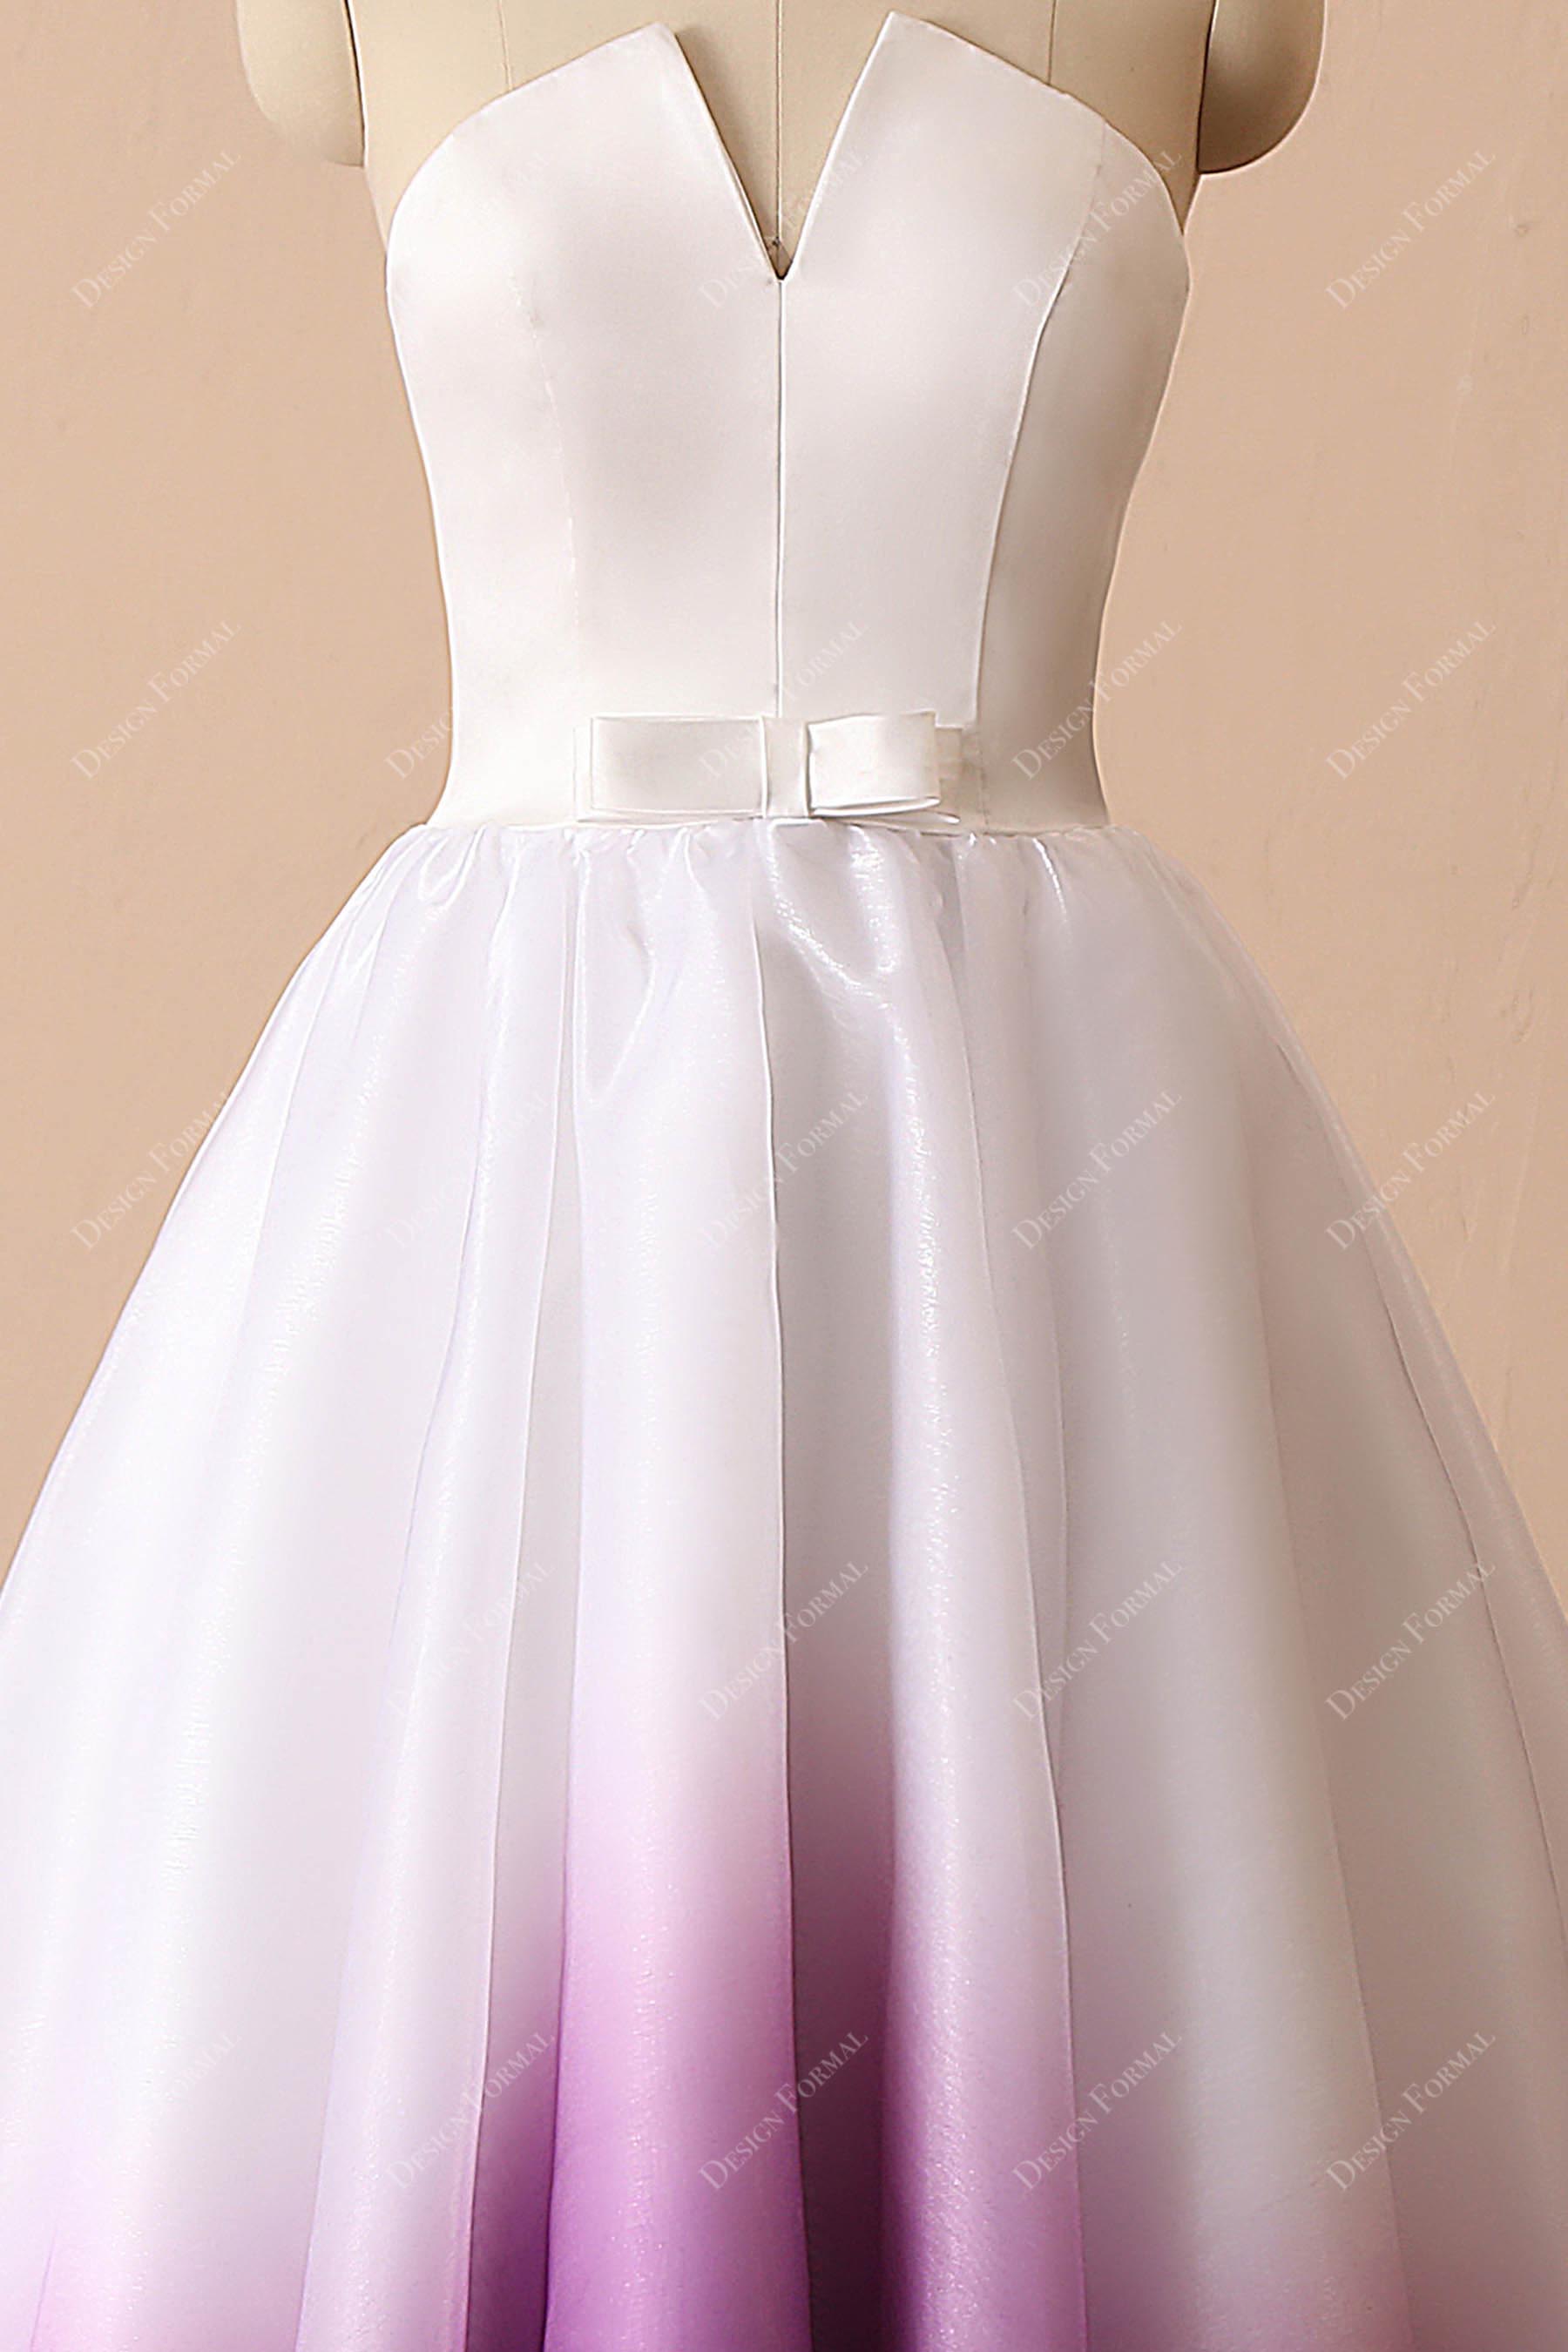 V-notch neck strapless bridal dress